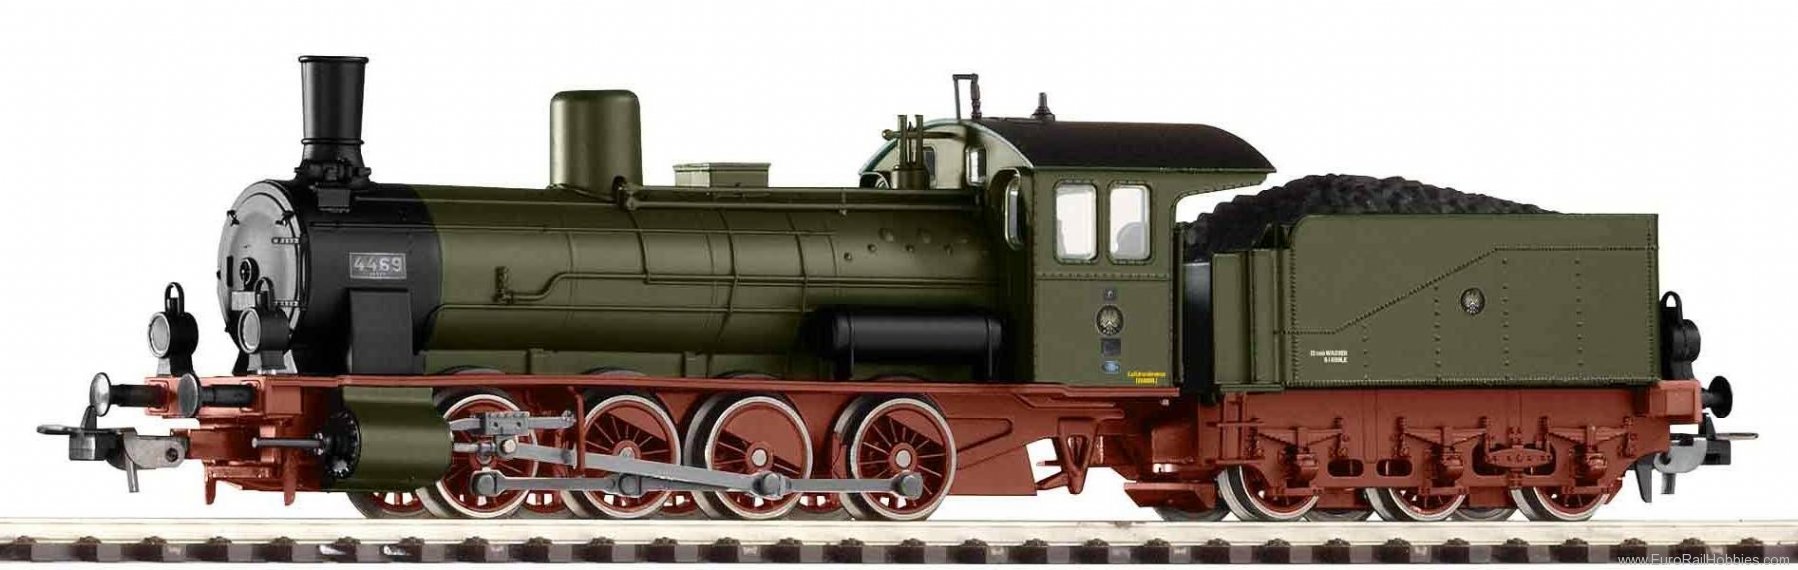 Piko 57563 Tender locomotive G7.1 KPEV I (Piko Hobby)